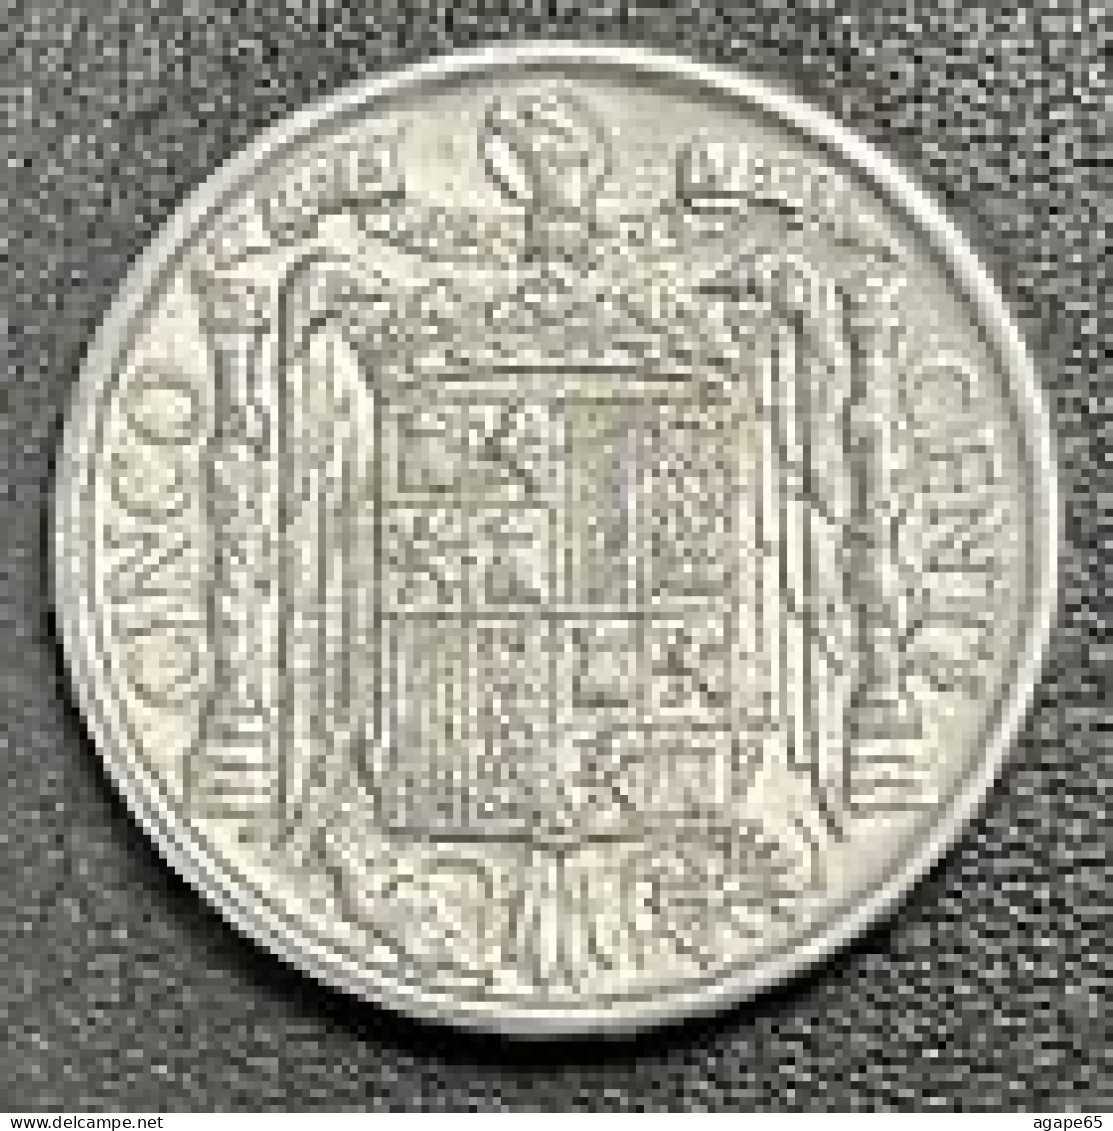 5 Centimos, Spain, 1945 - 5 Centesimi